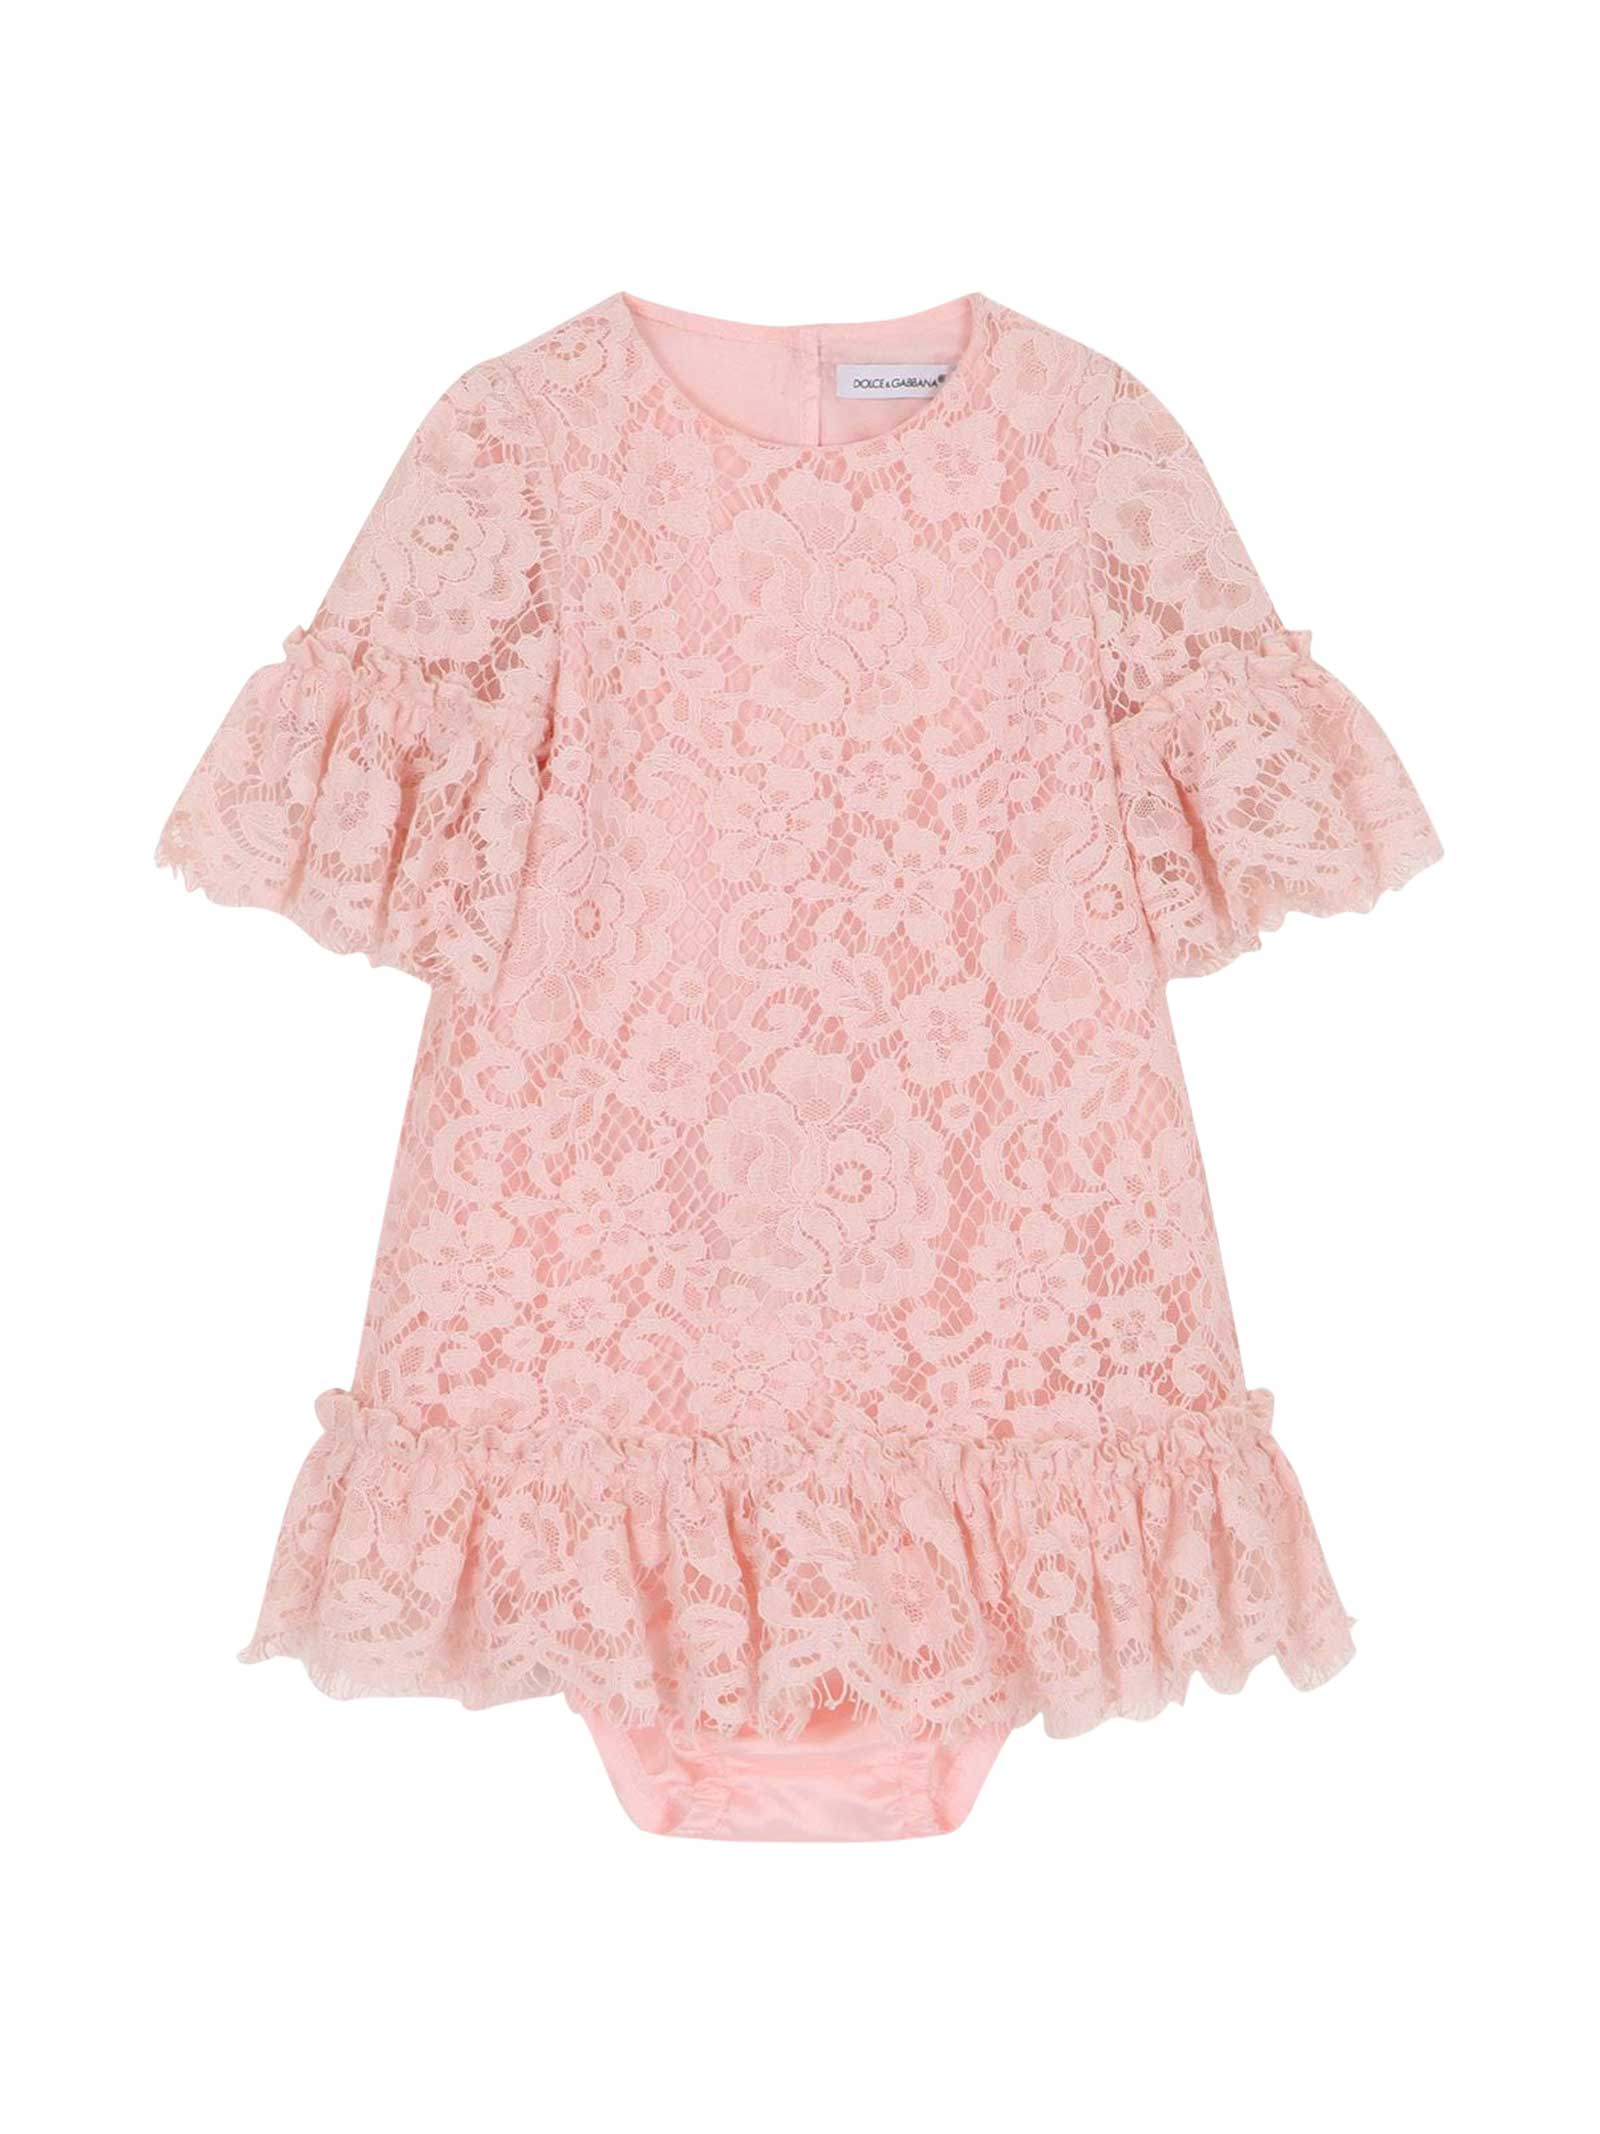 Dolce & Gabbana Baby Girl Pink Dress